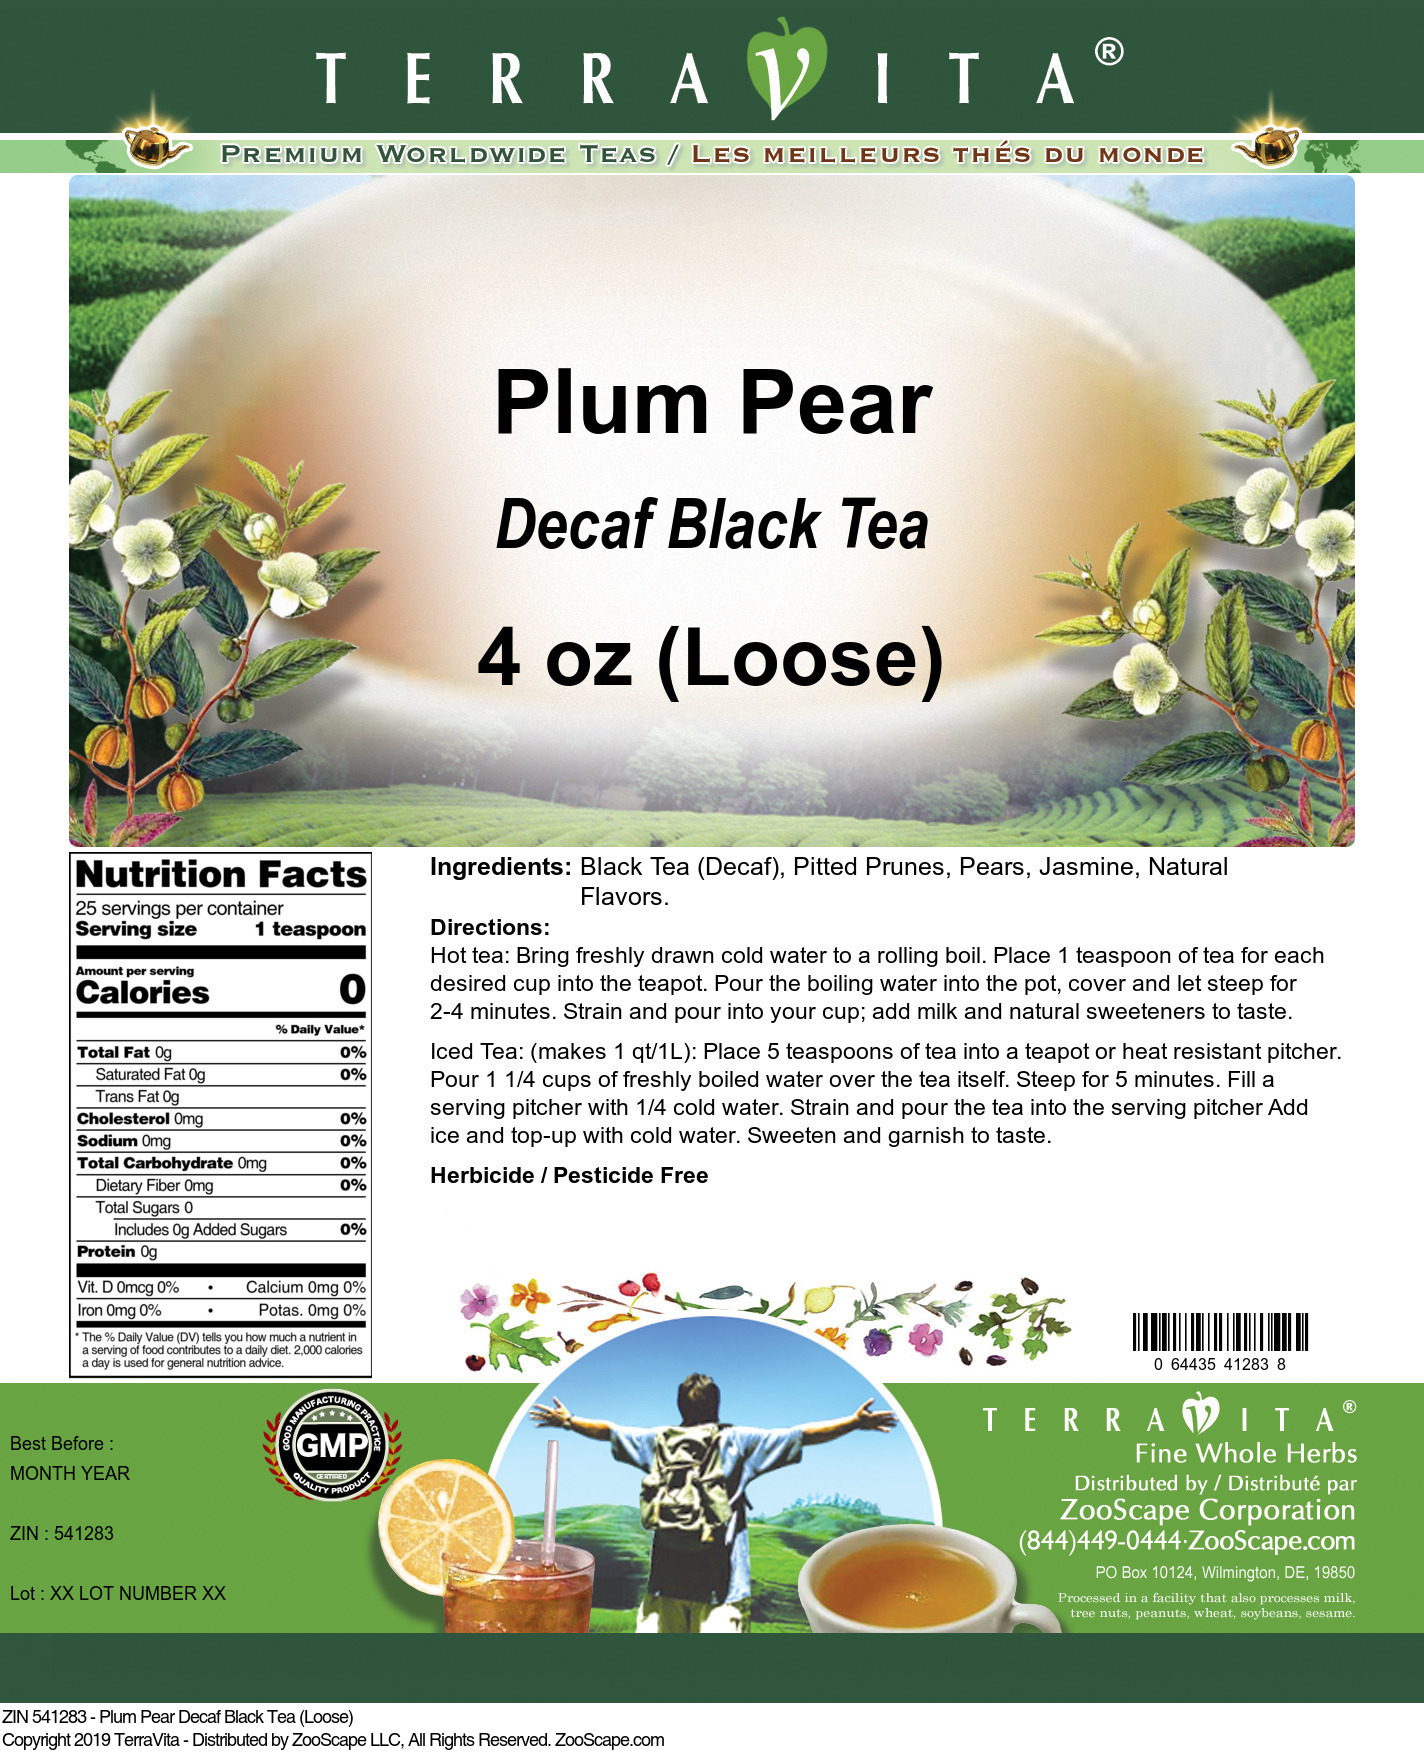 Plum Pear Decaf Black Tea (Loose) - Label